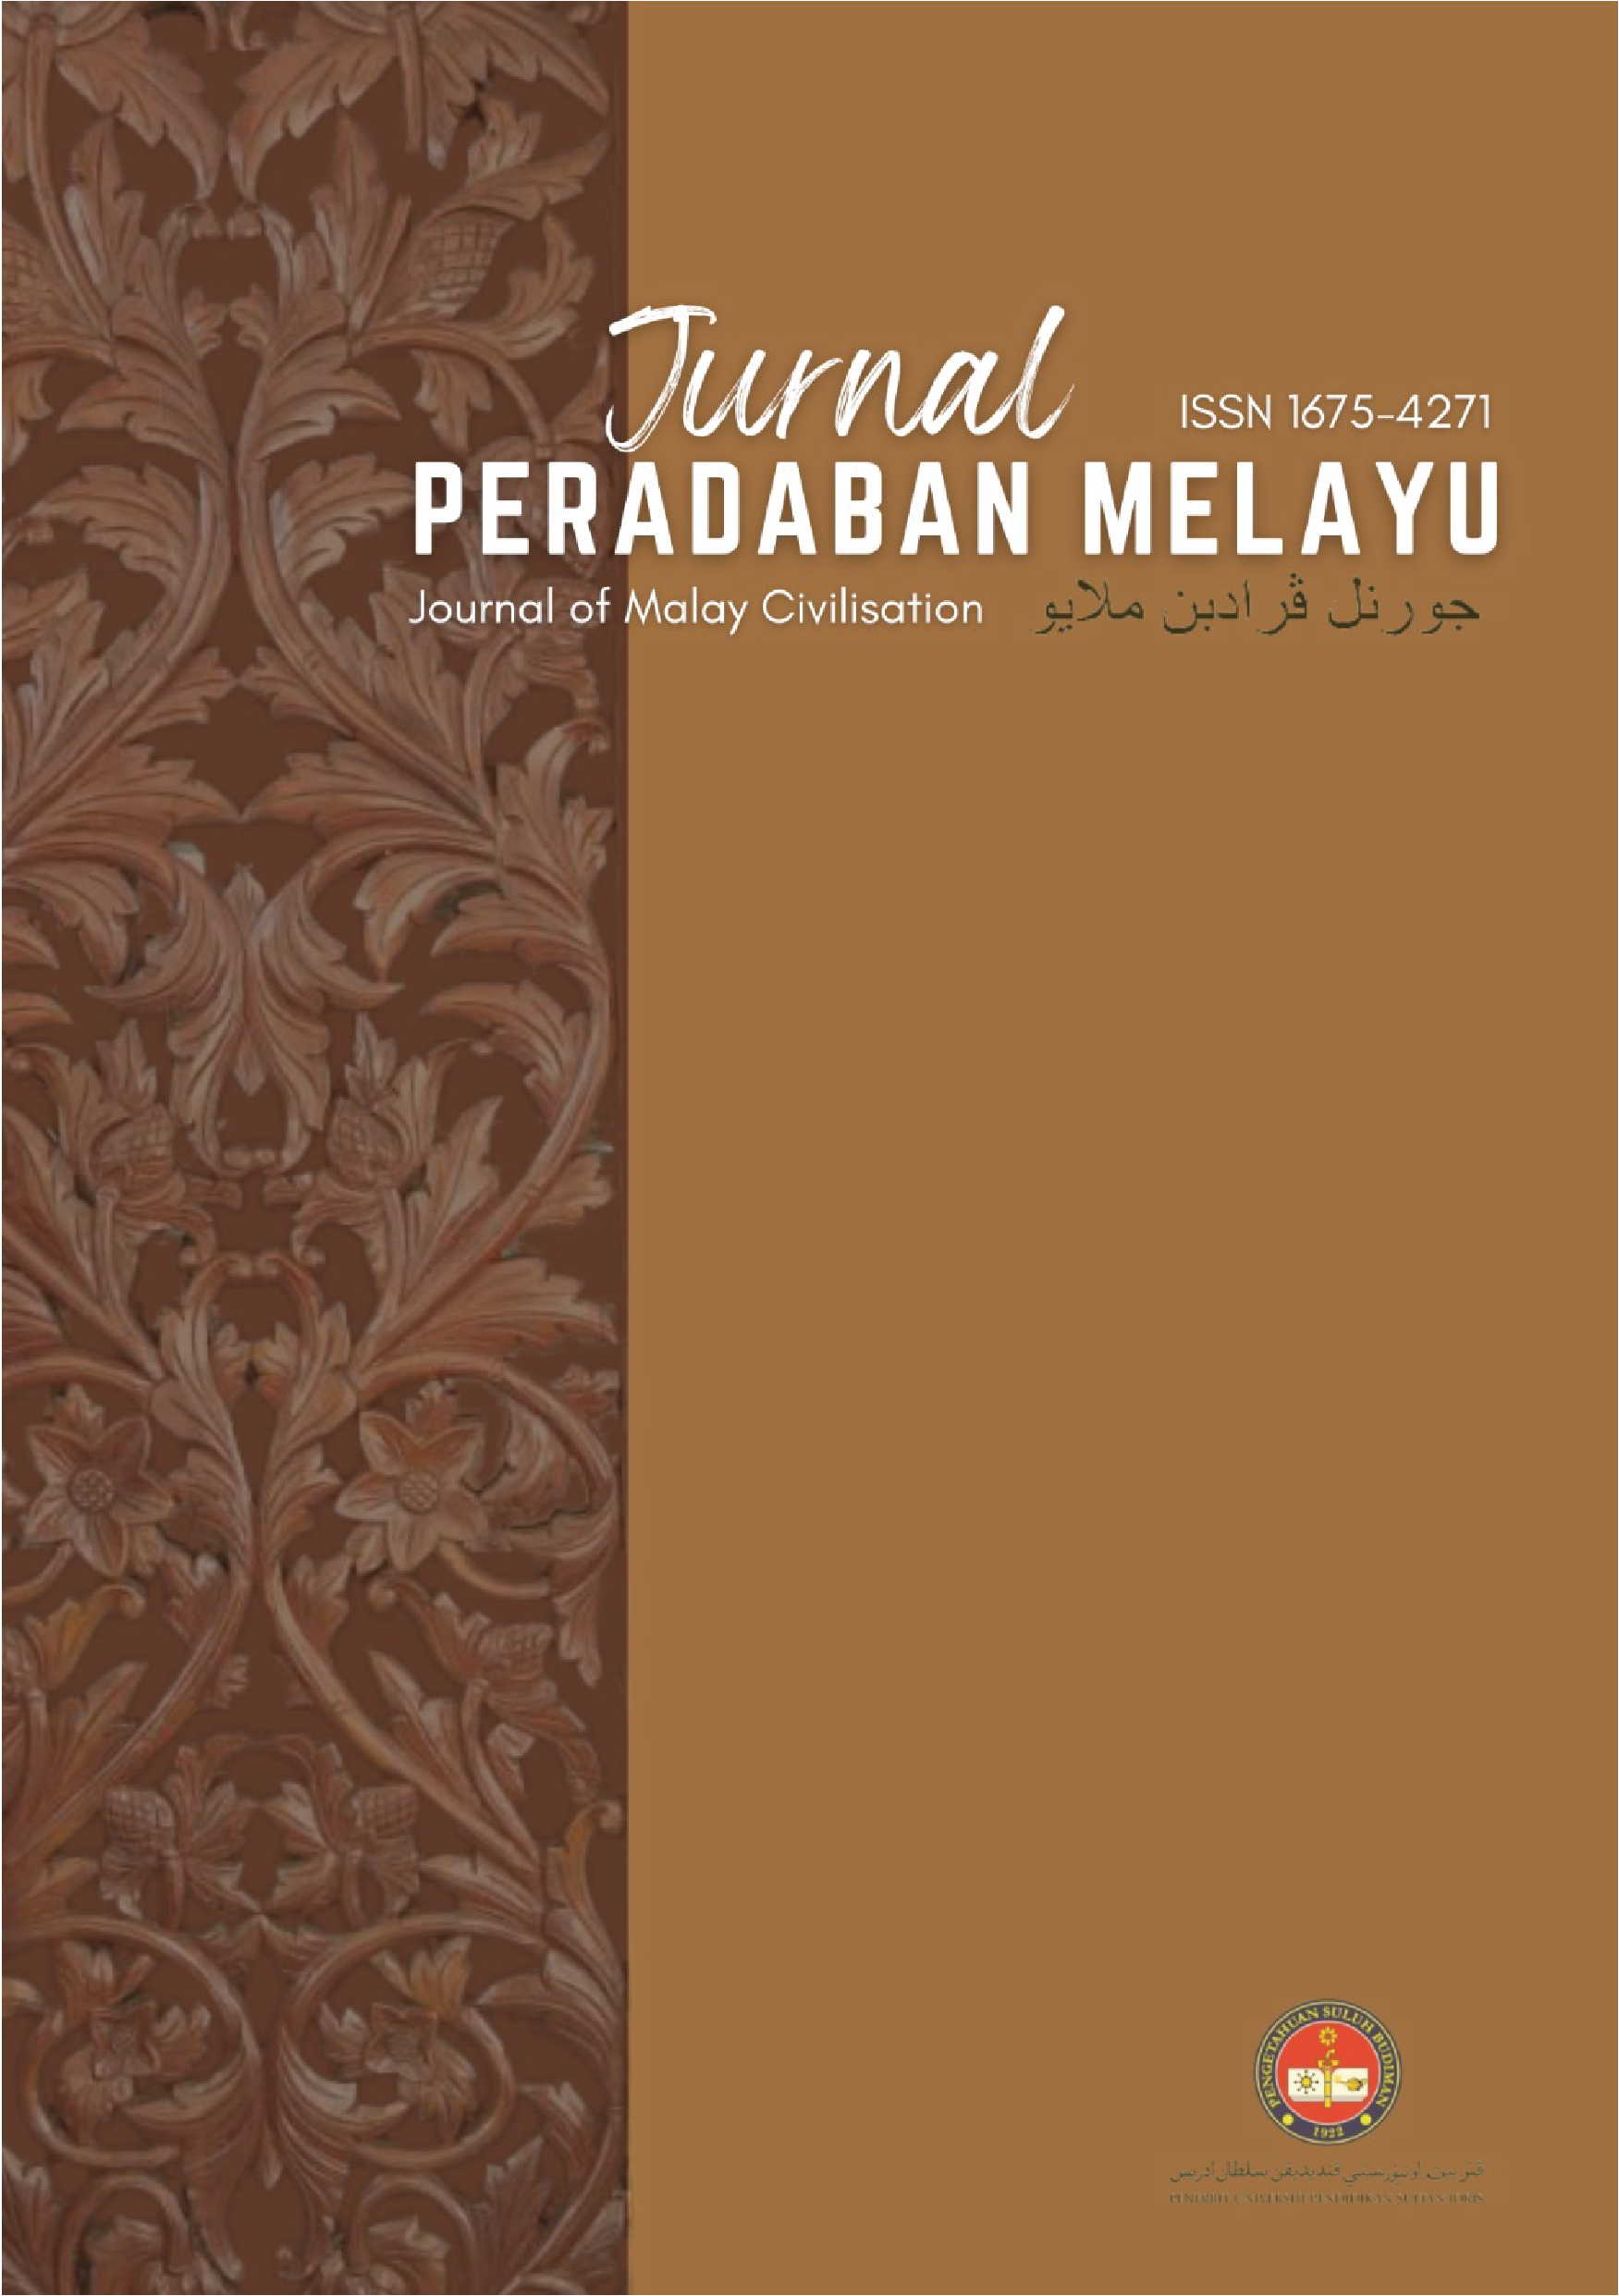 					View Vol. 14 (2019): Jurnal Peradaban Melayu
				